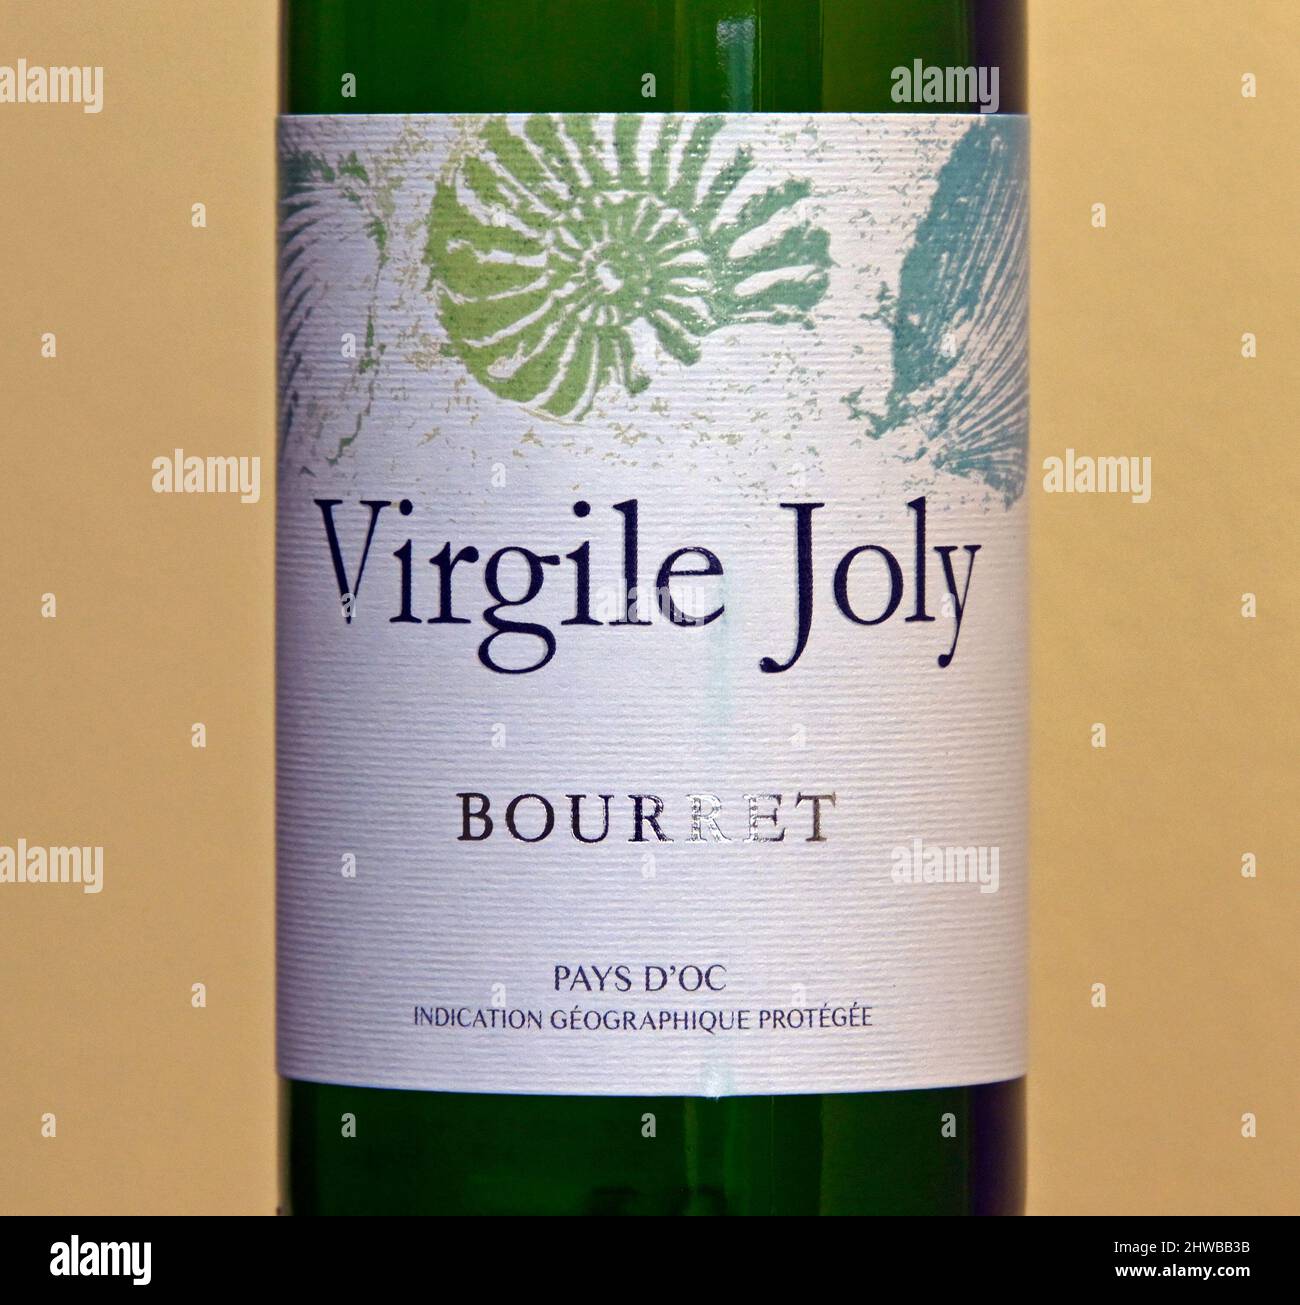 Wine label. Virgile Joly. Bourret.  Pays D'Oc. Indication geographique protege. Stock Photo